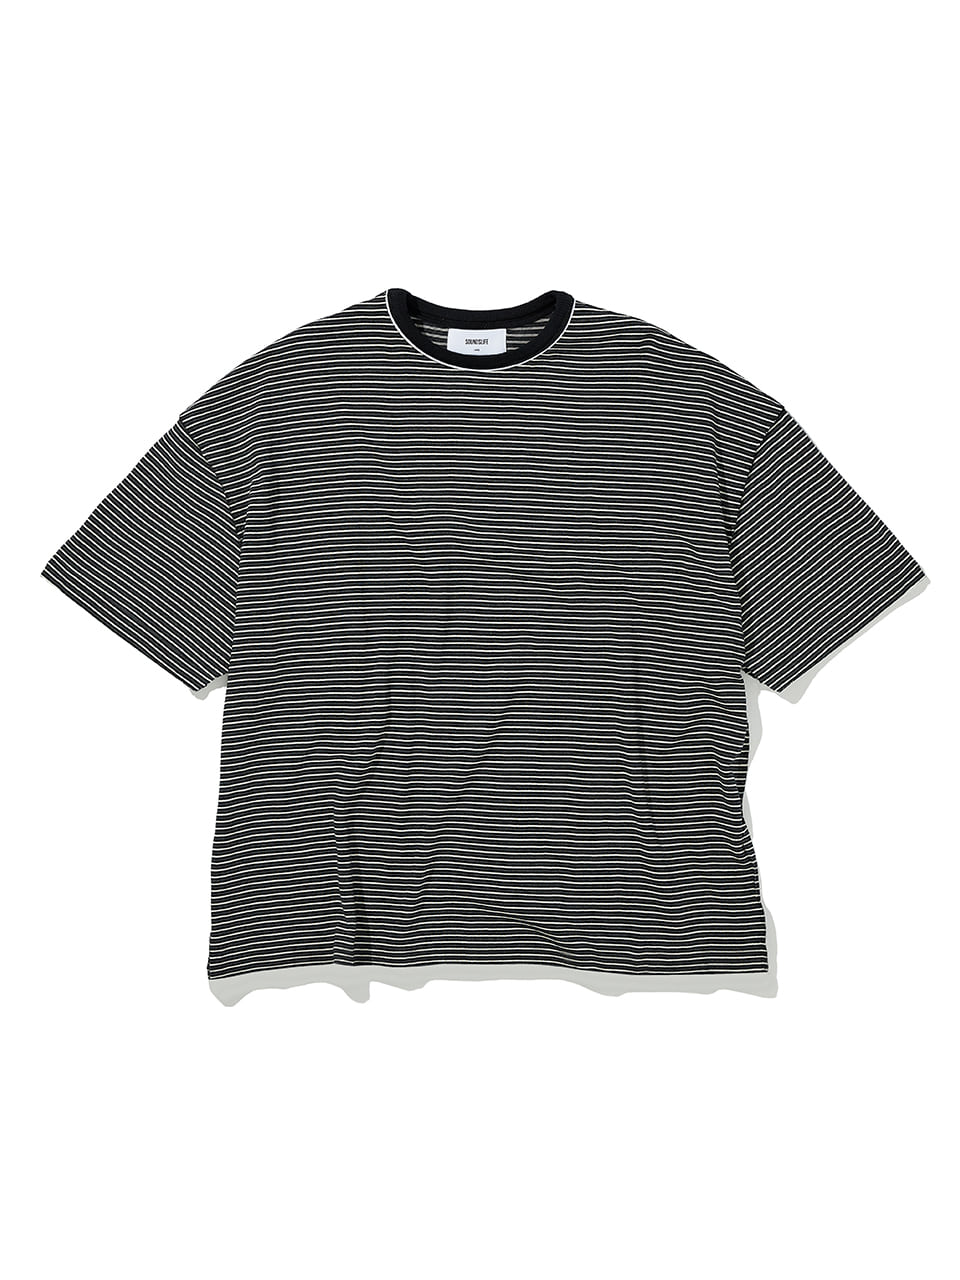 SOUNDSLIFE - Vacation Striped T-Shirt Black